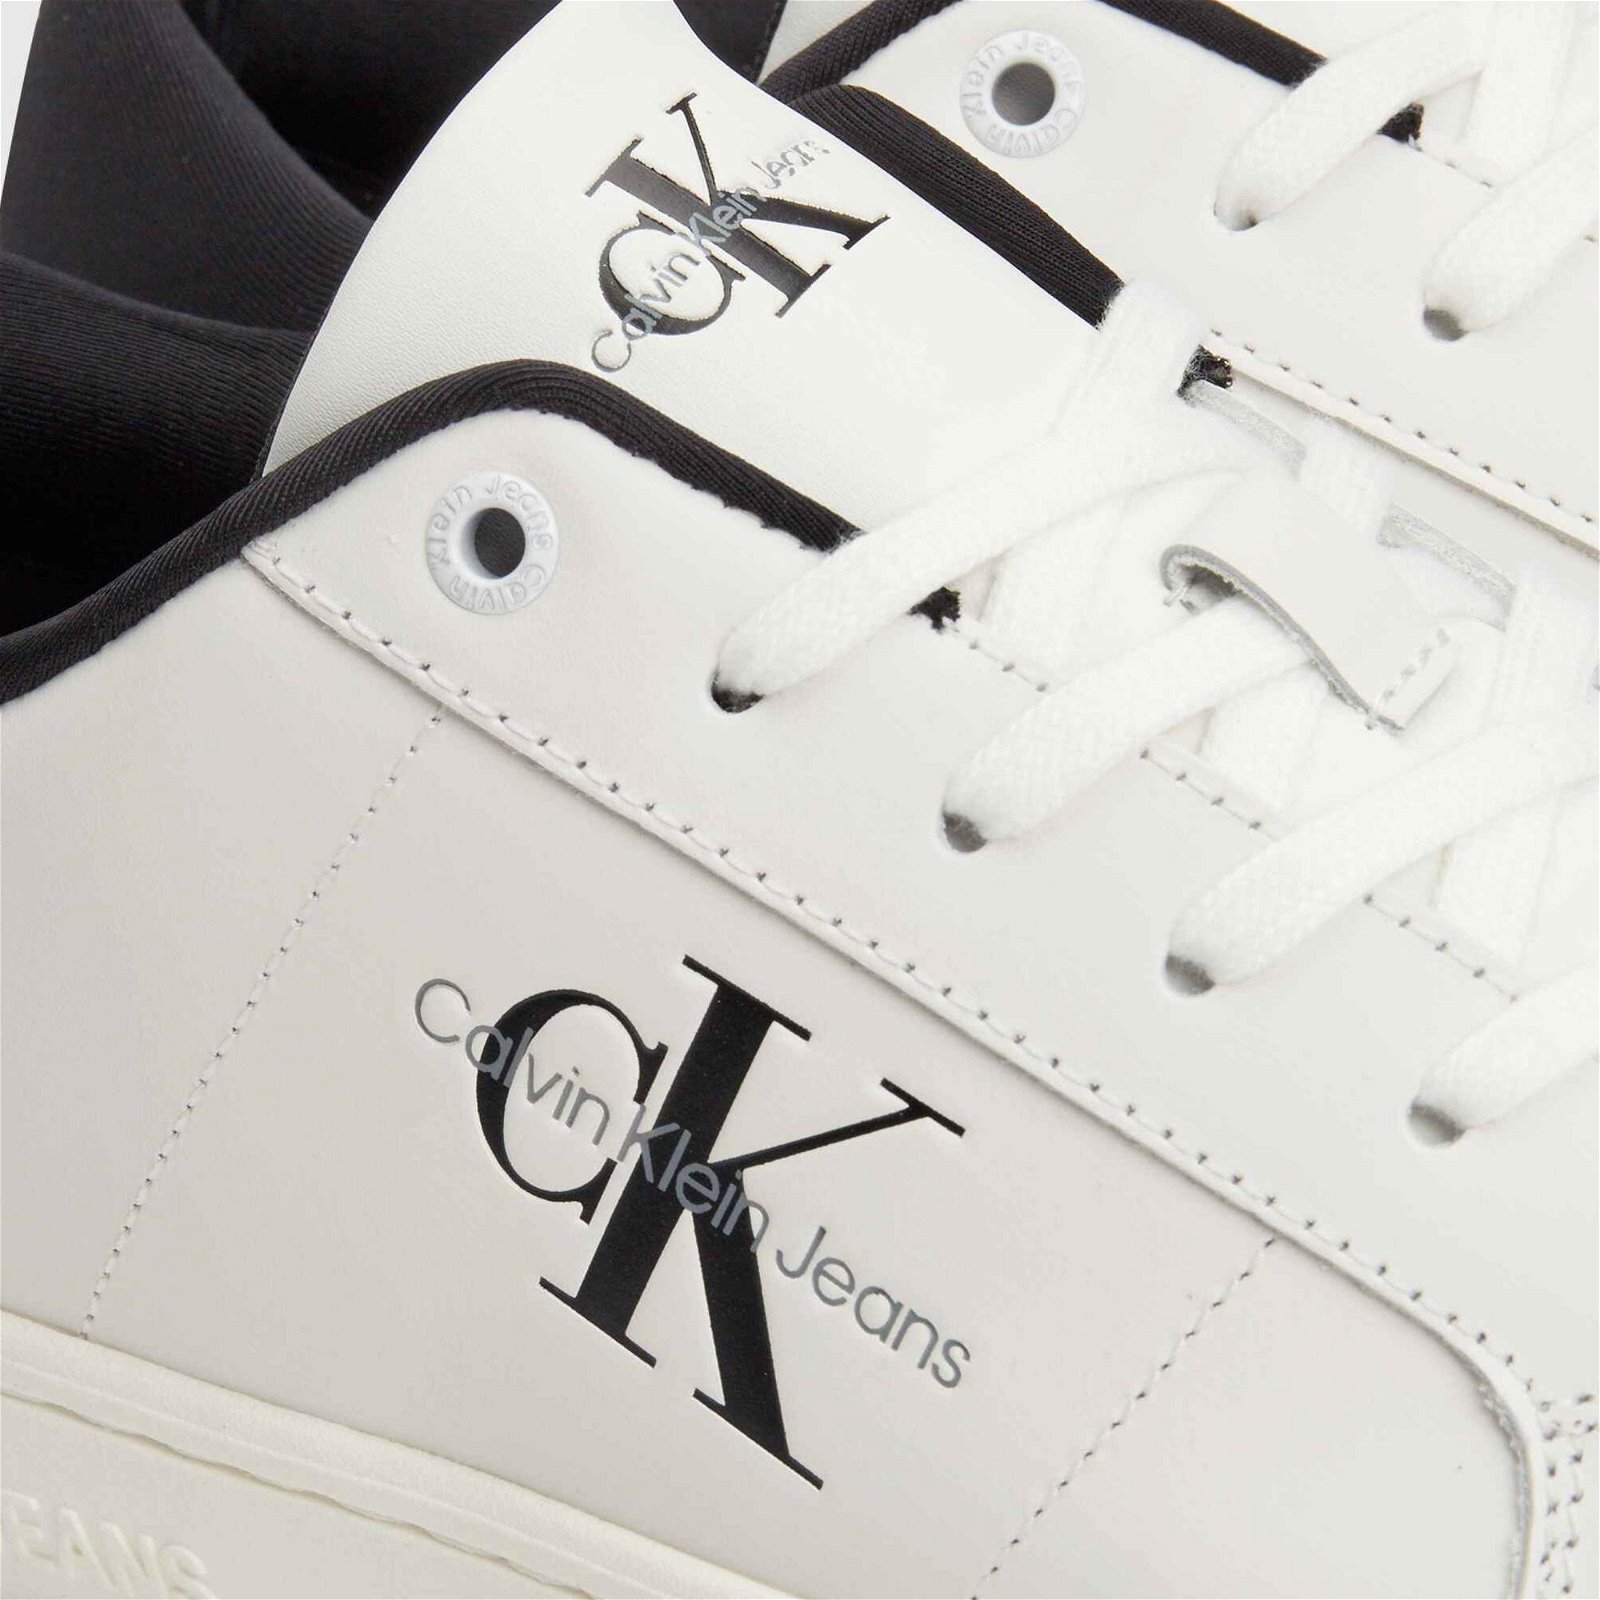 Calvin Klein Jeans Rome Erkek Beyaz Sneaker